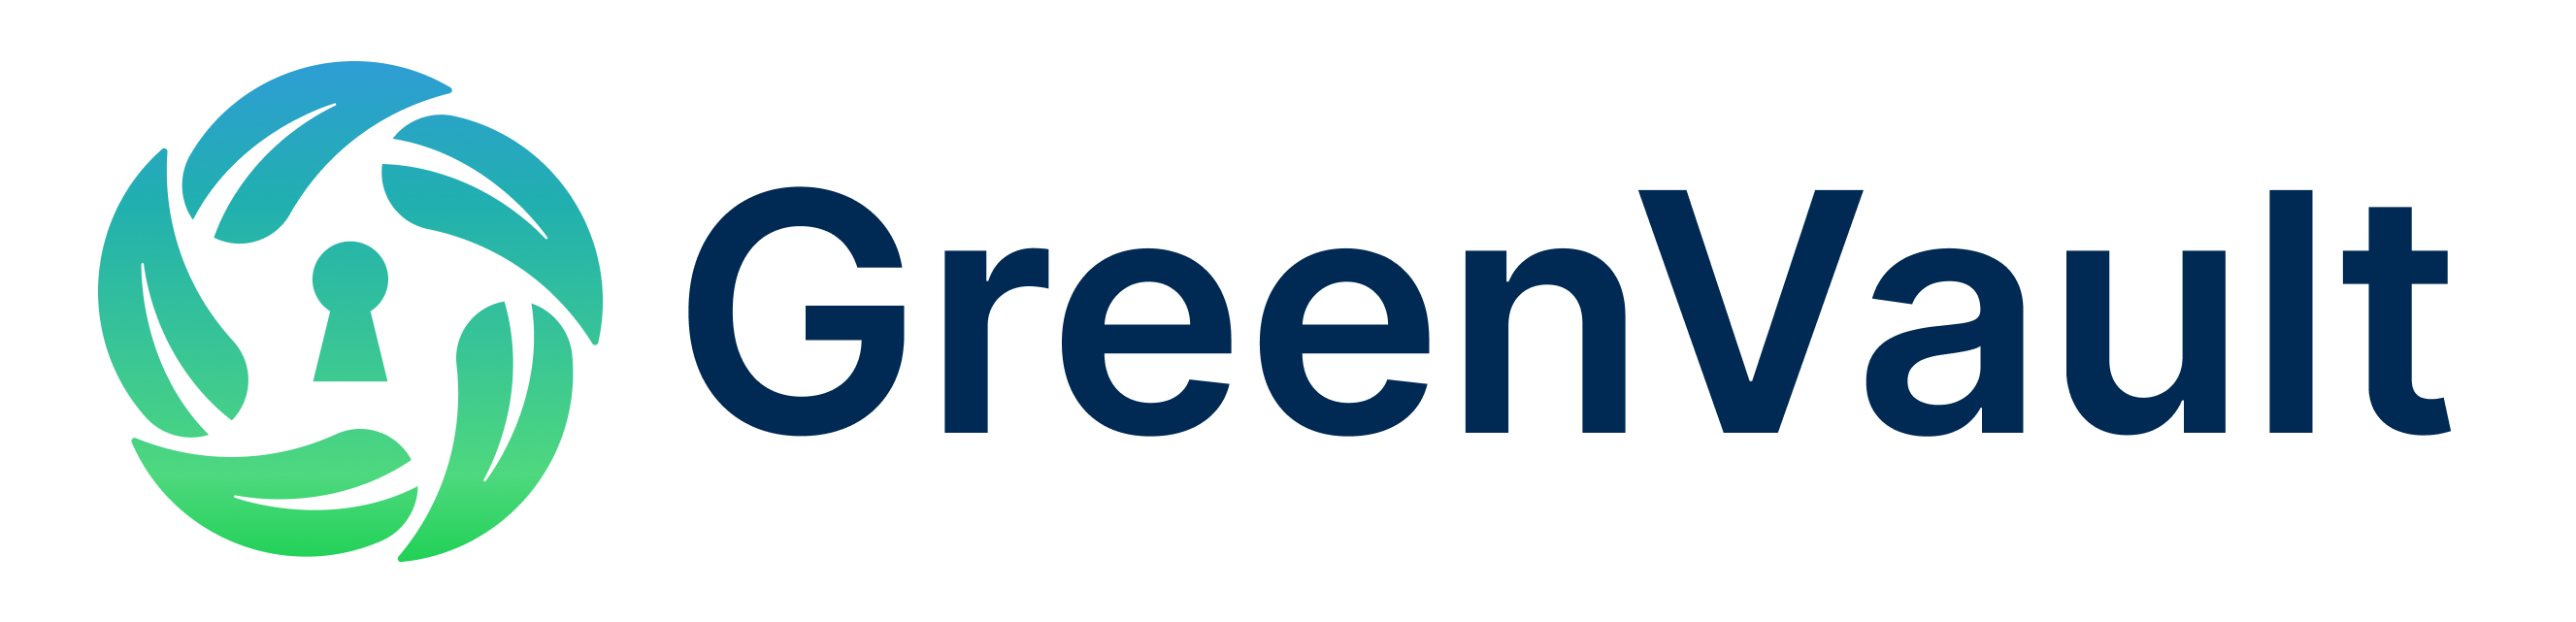 GreenVault